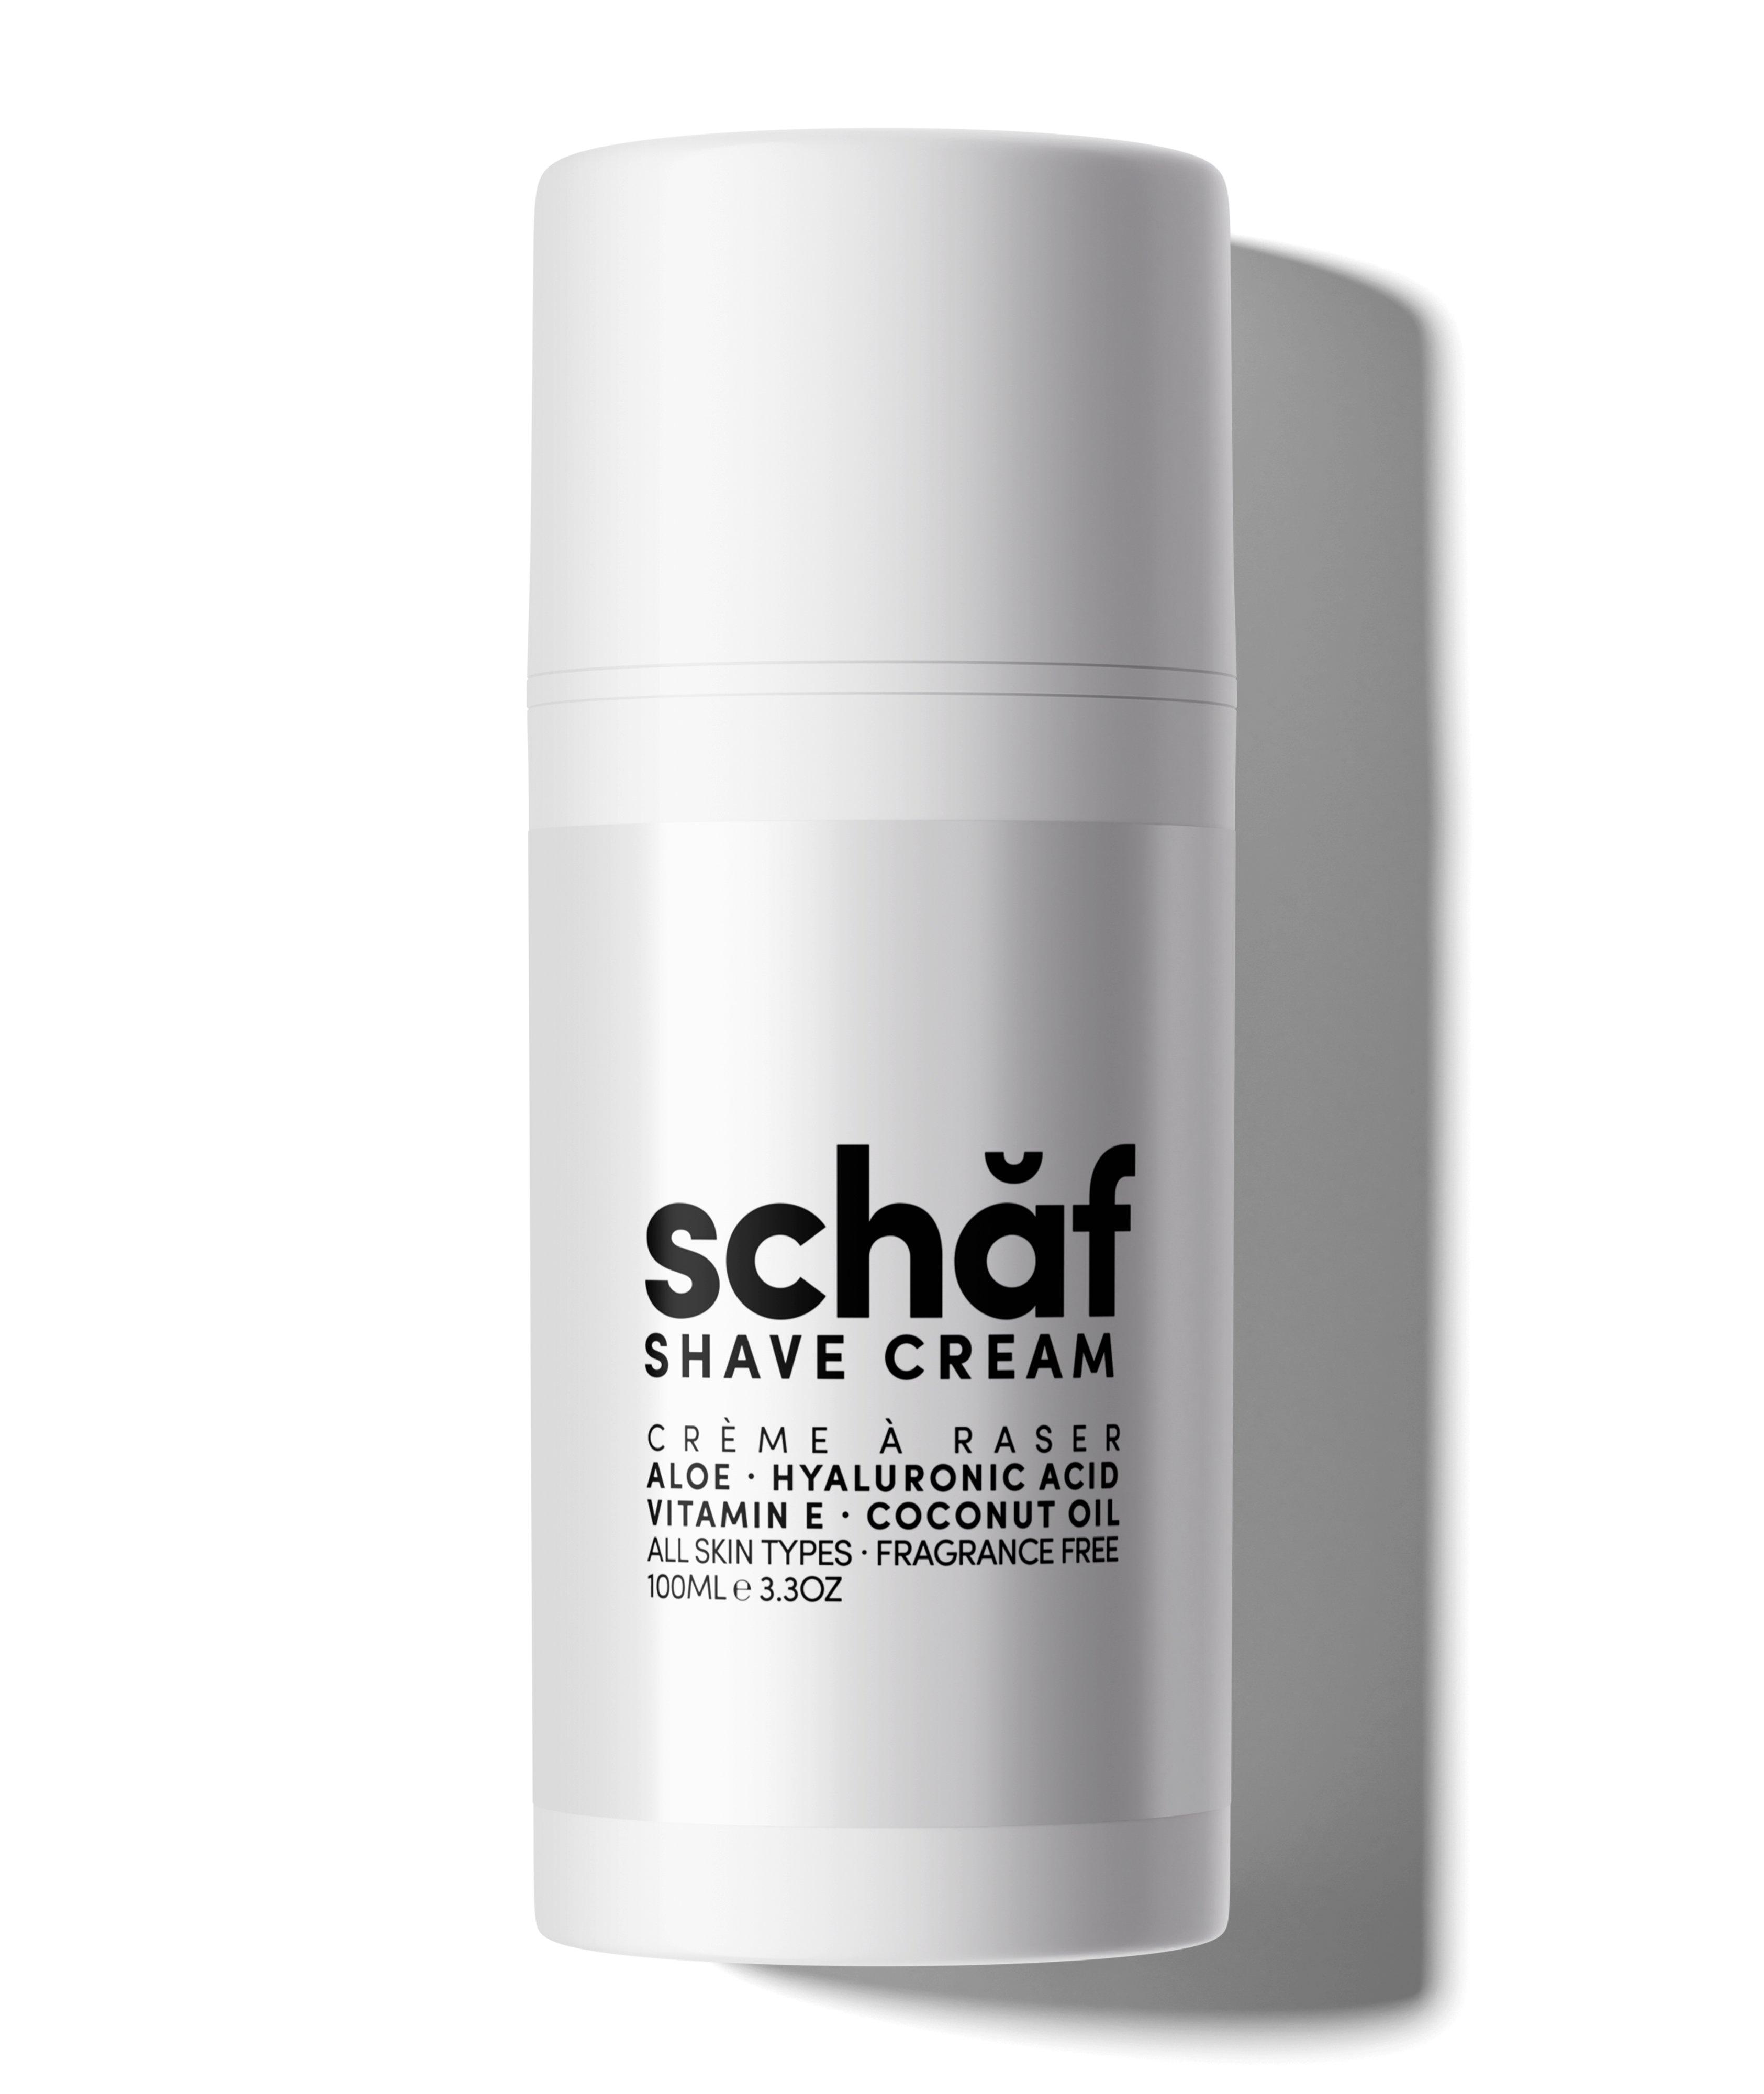 Schaf Shave Cream image 0